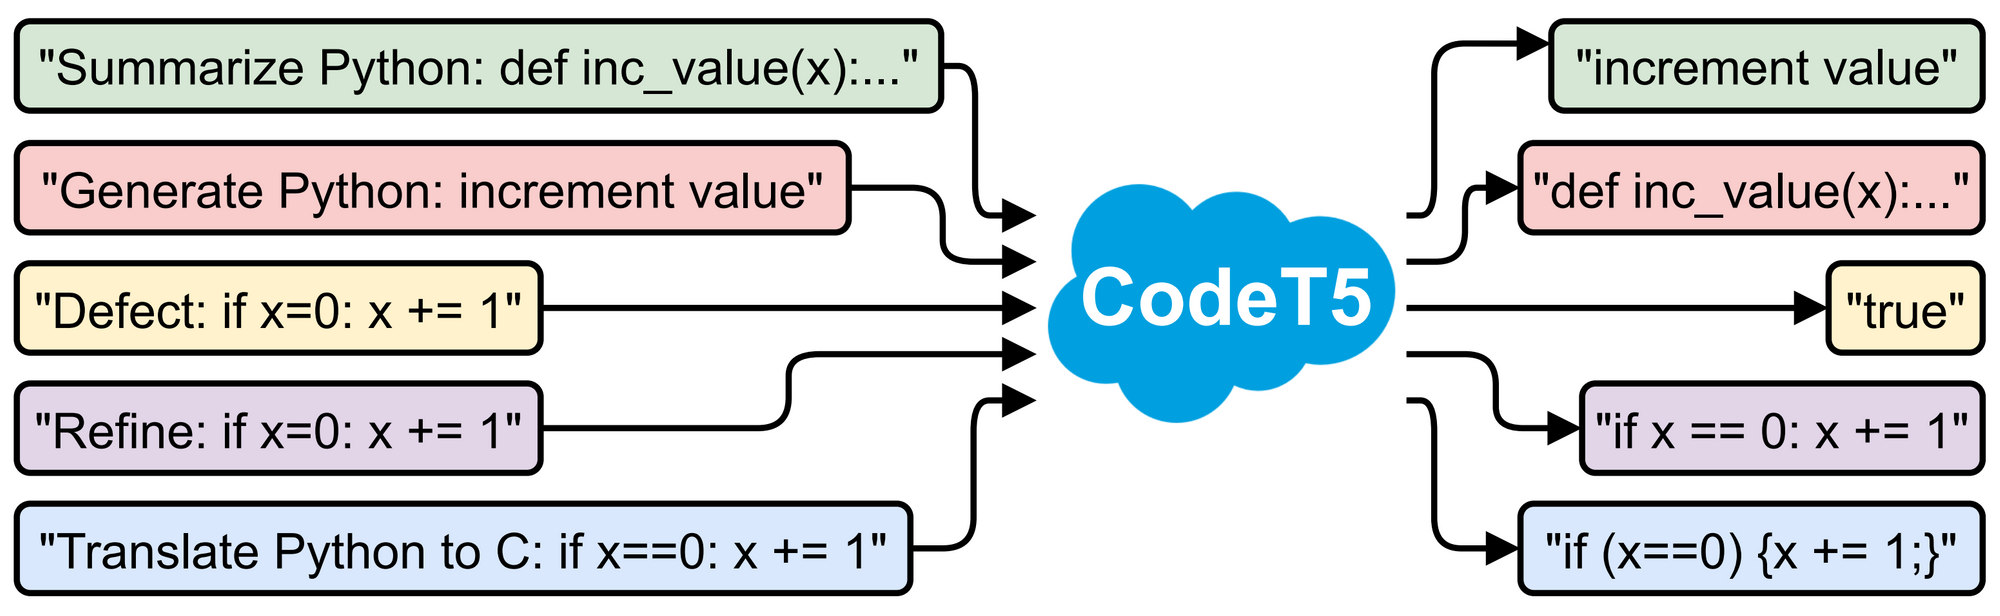 CodeT5: The Code-aware Encoder-Decoder based Pre-trained Programming Language Models